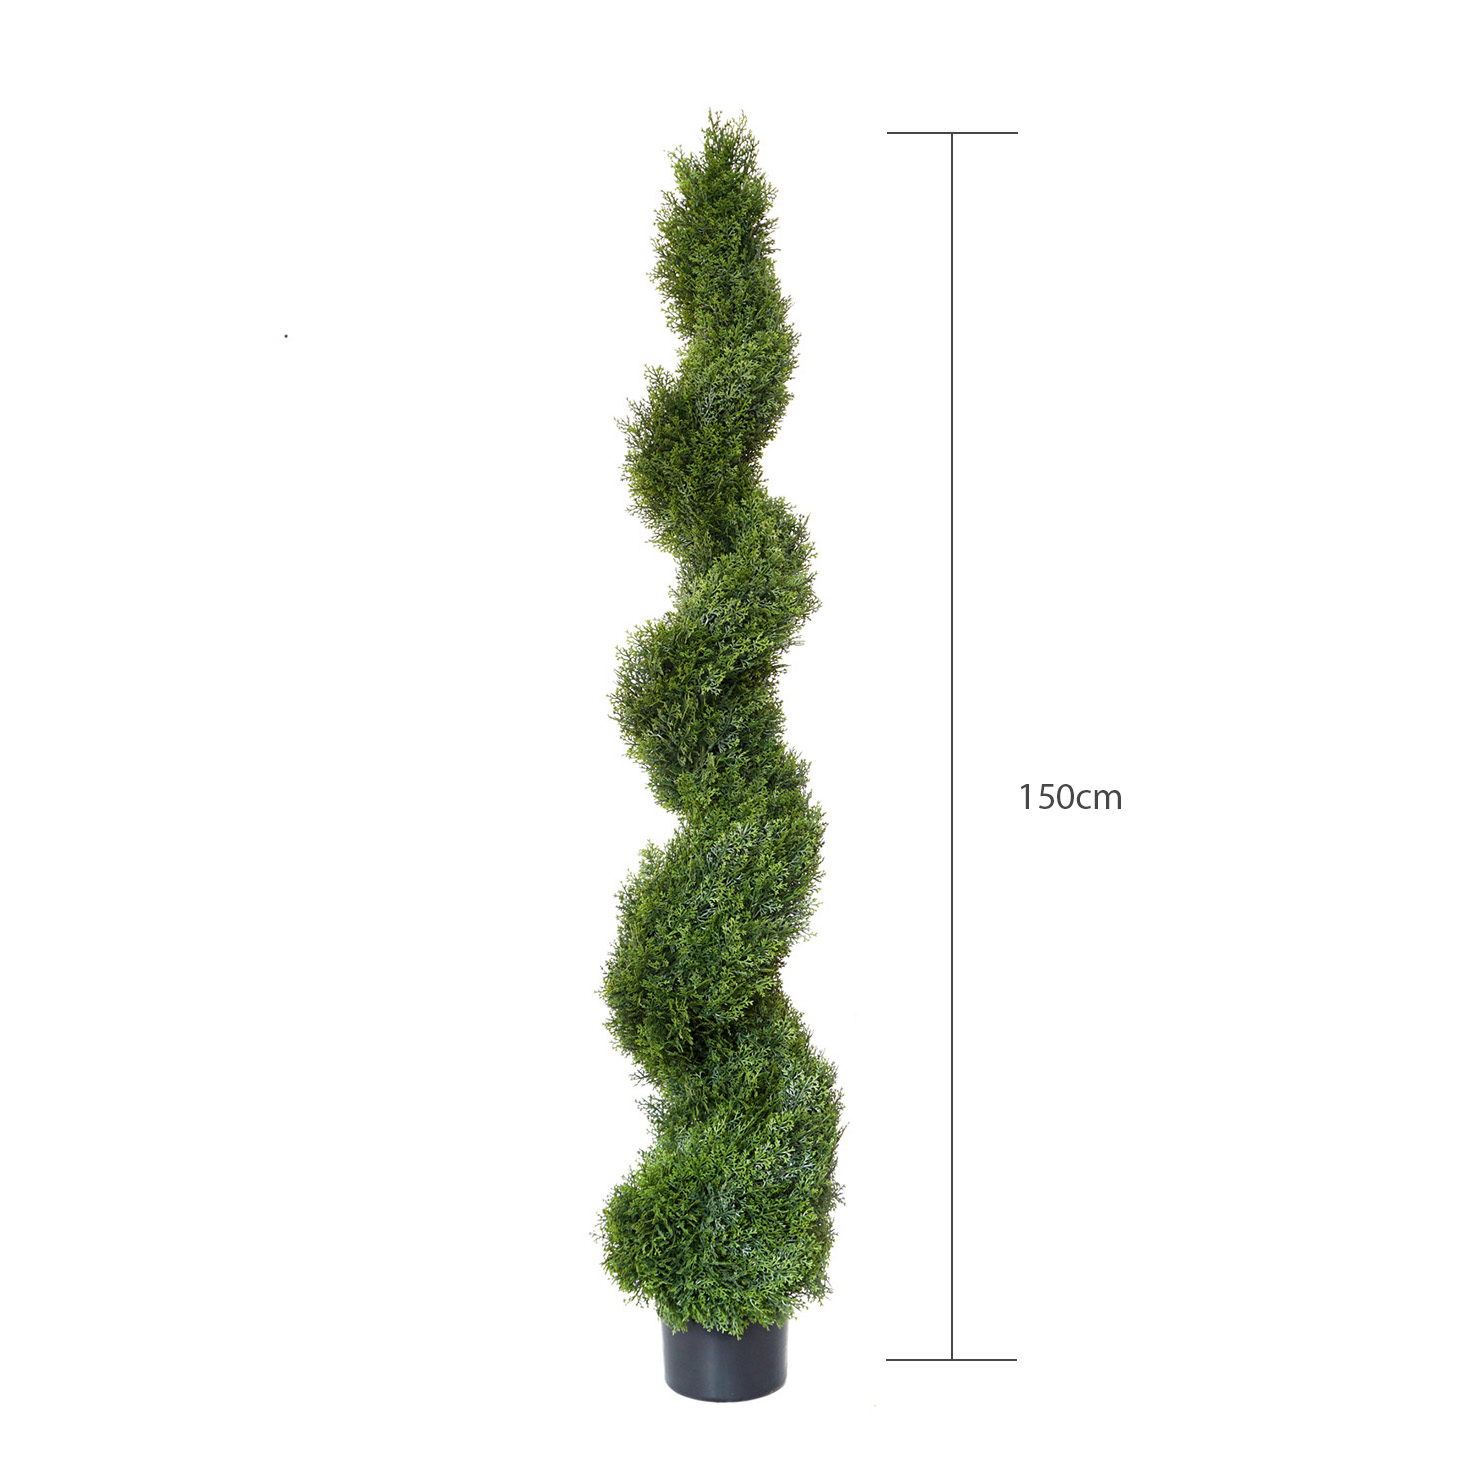 150cm high cypress spiral tree